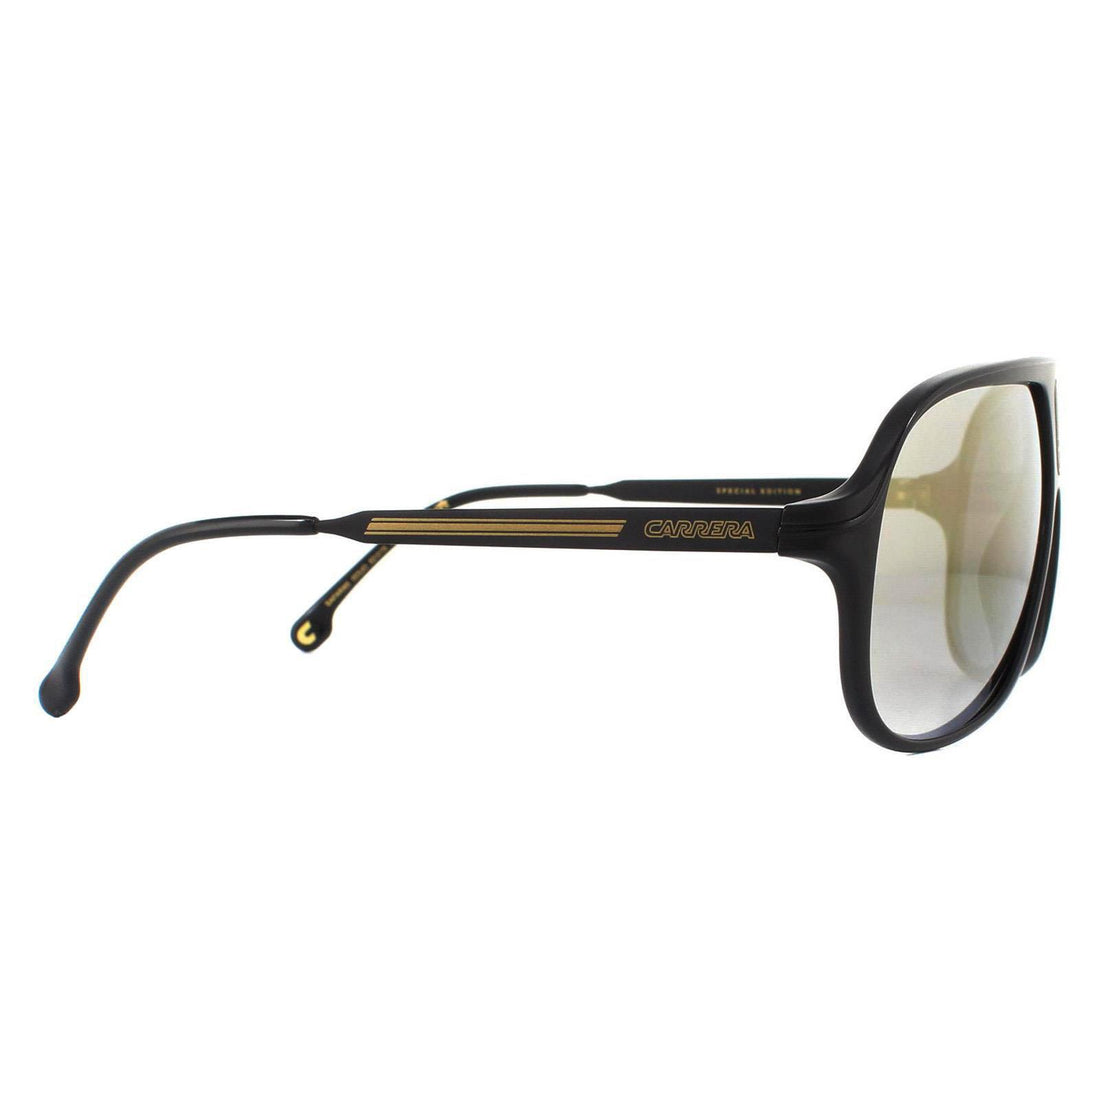 Carrera Safari 65 Sunglasses